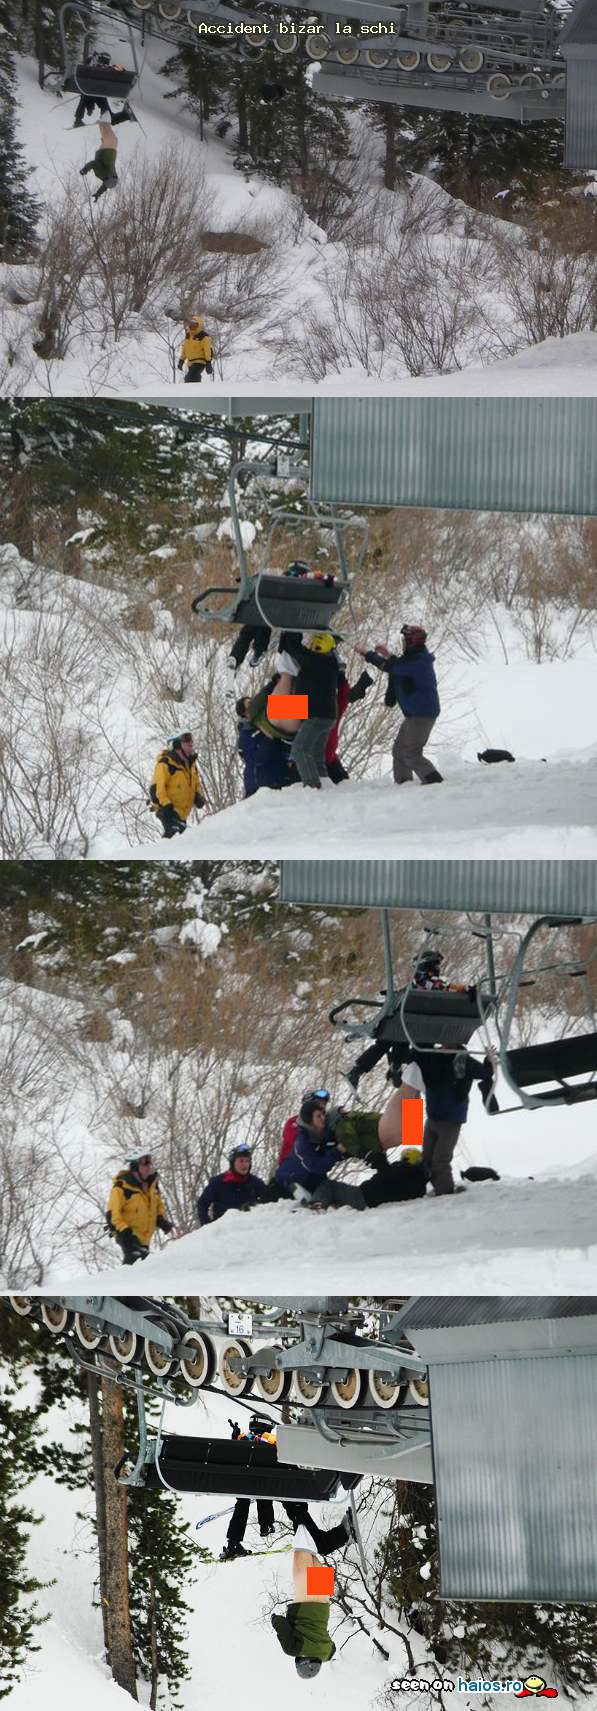 Accident bizar pe partia de schi, la
telescaun, intr-o duminica